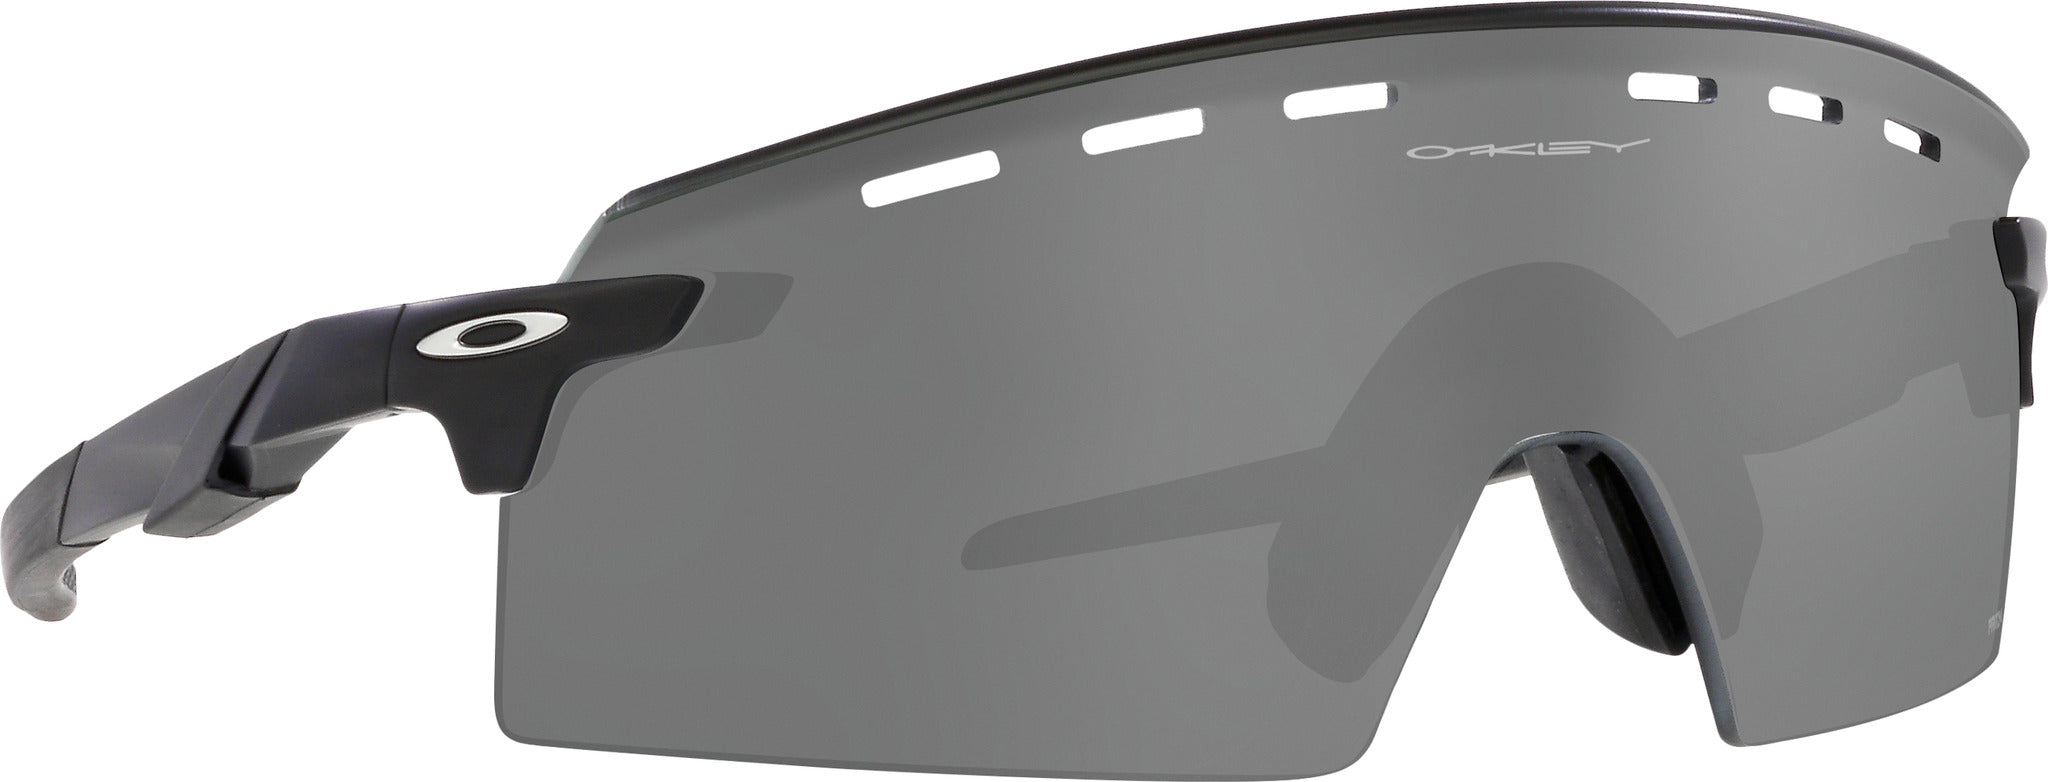 Oakley Encoder Strike Vented Sunglasses - Matte Black - Prizm Black Iridium  Lens - Unisex